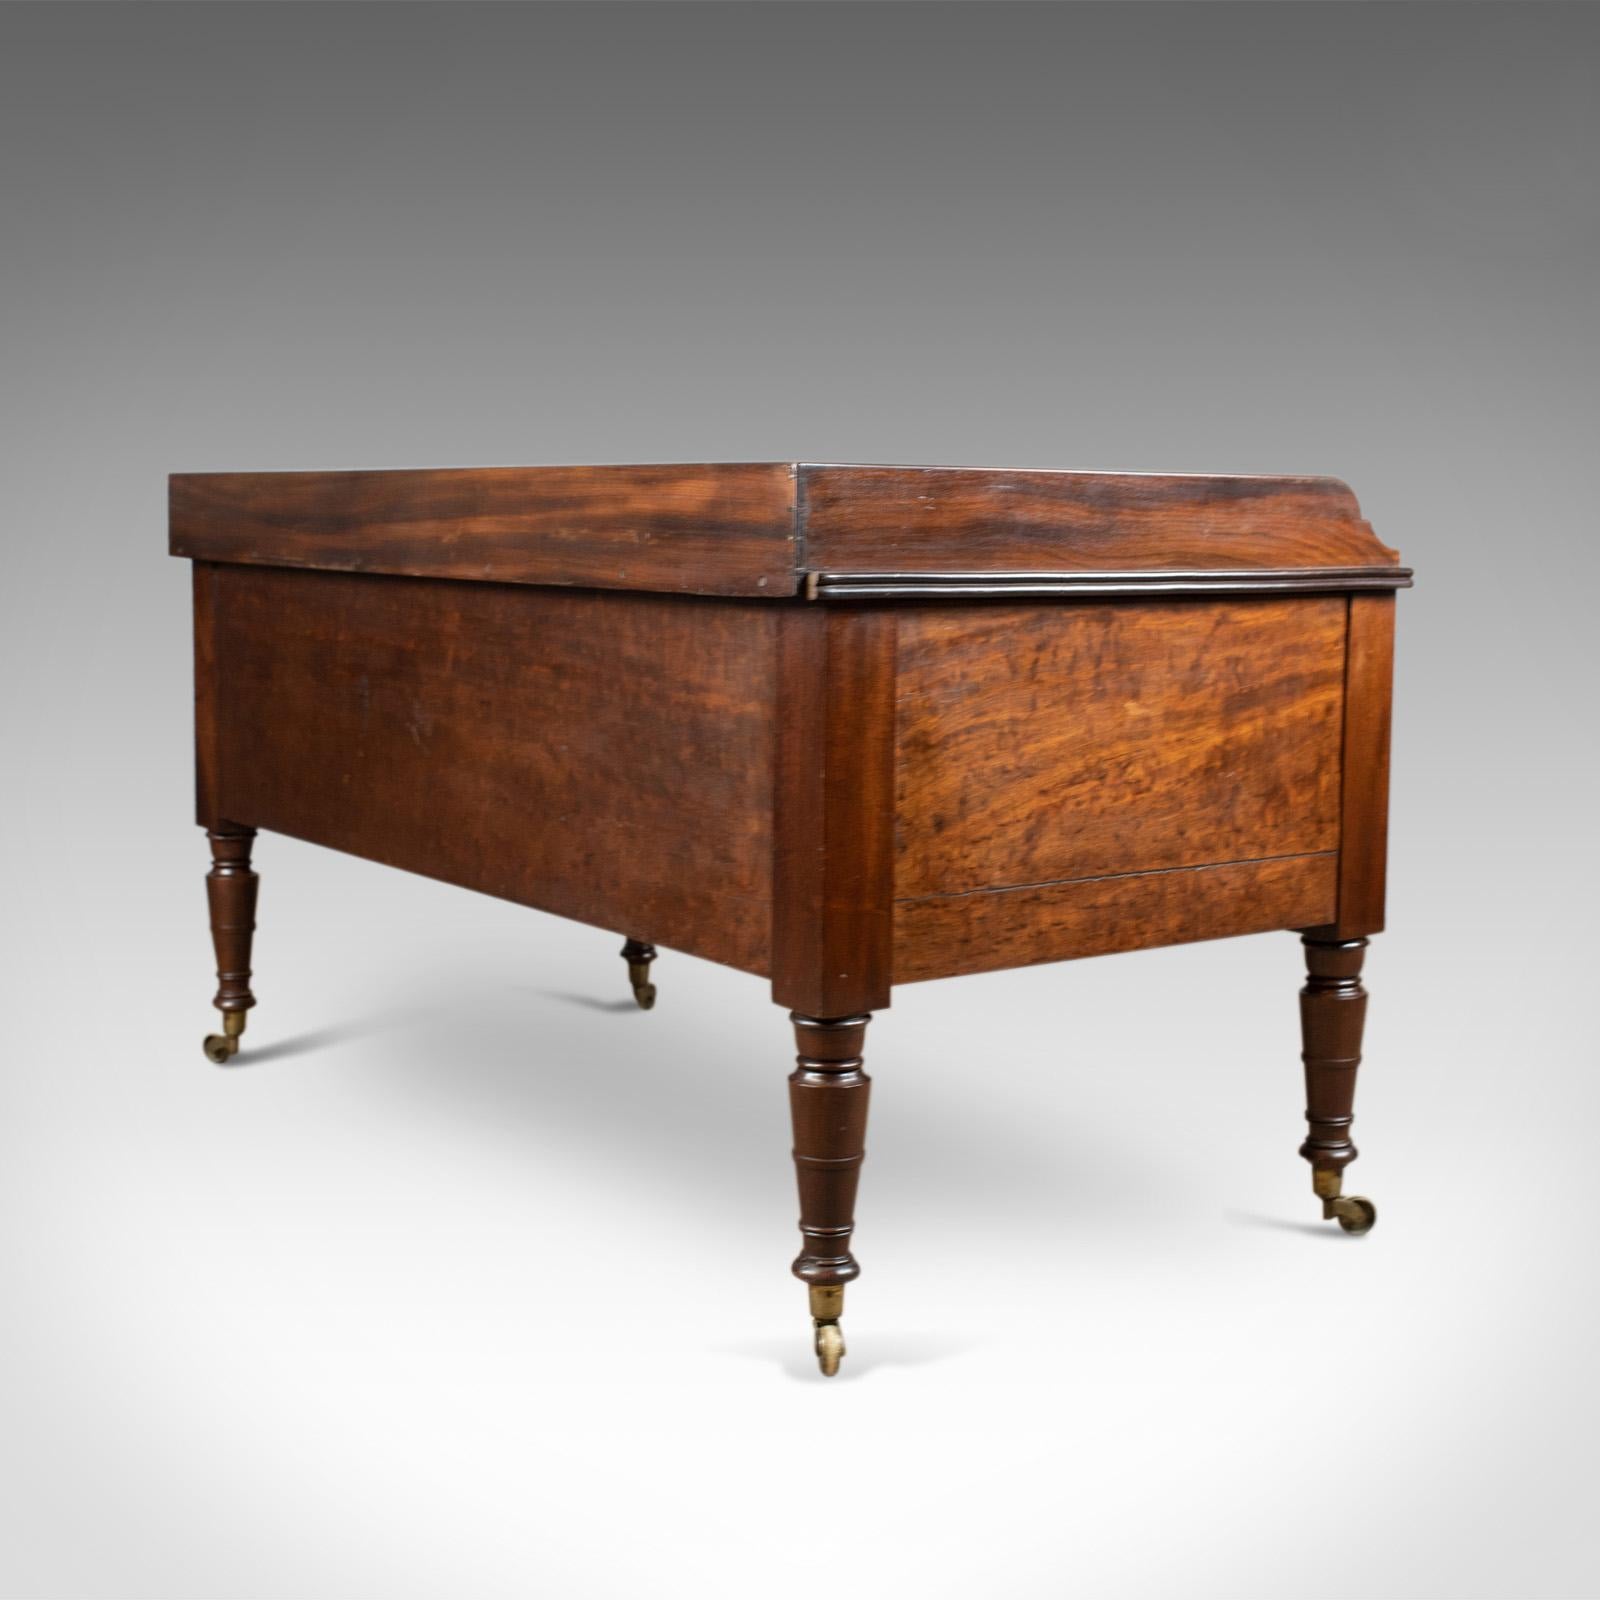 19th Century Antique Desk, Large, English, William IV, Mahogany, Kneehole, circa 1835